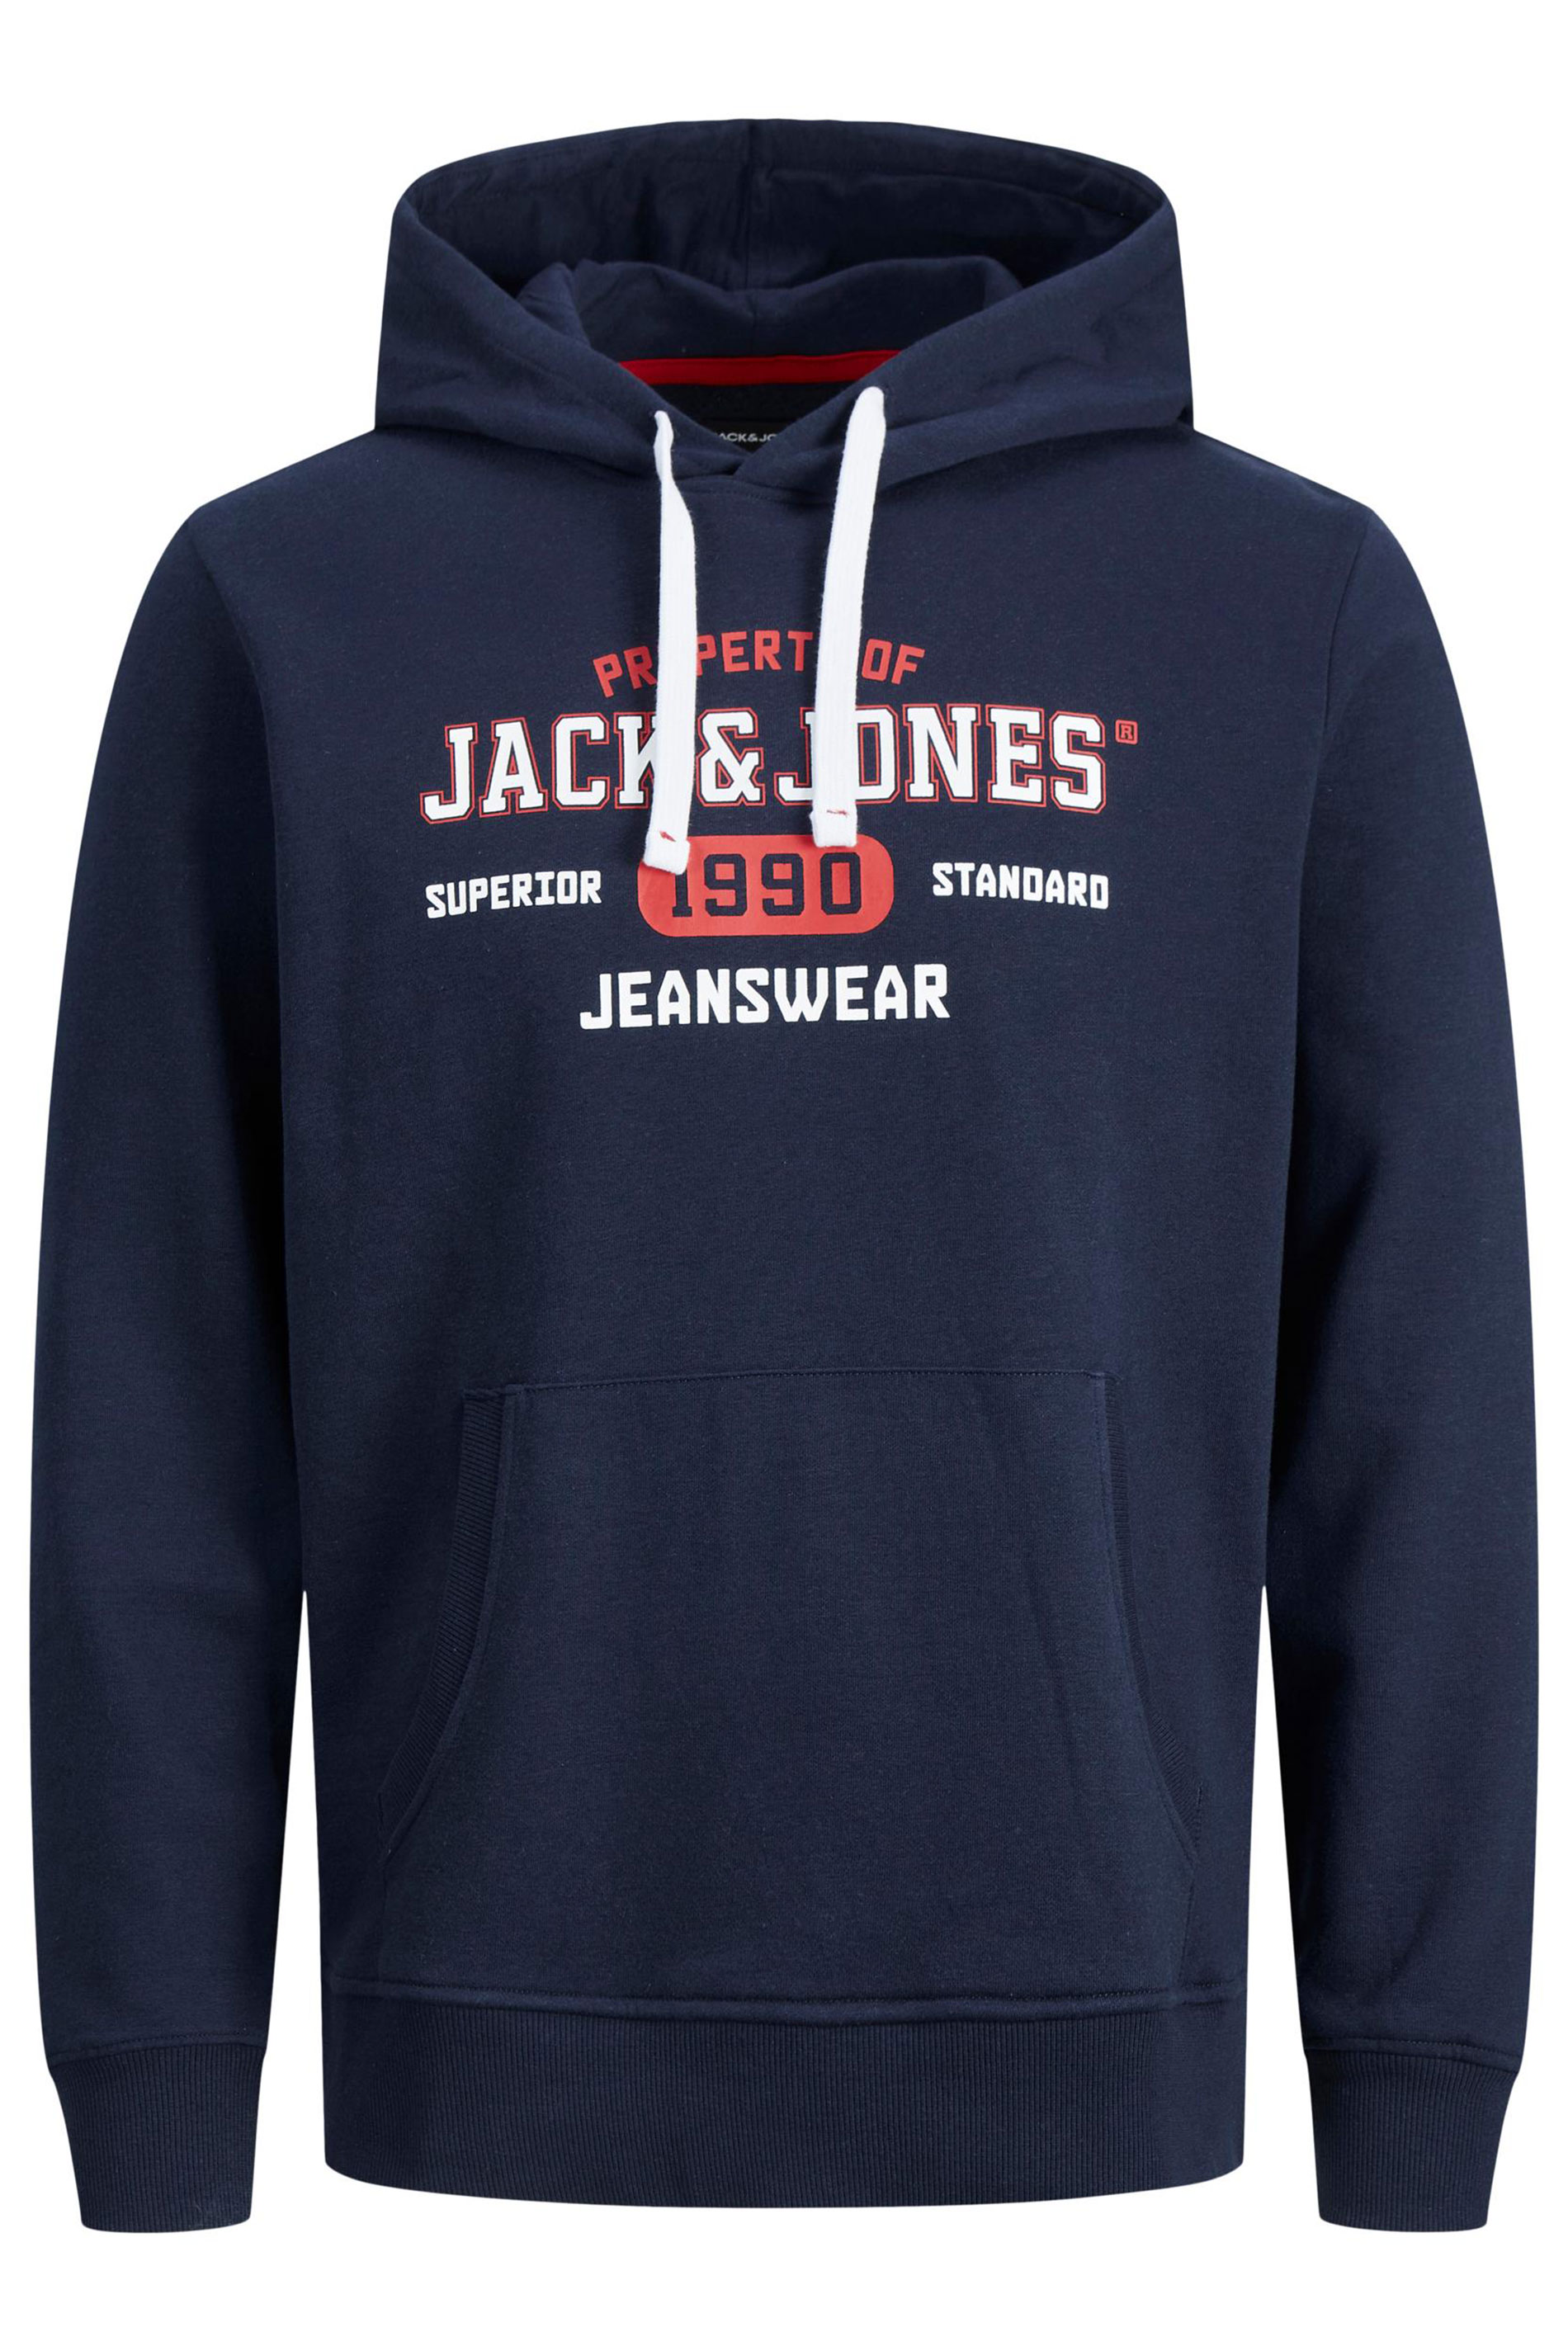 JACK & JONES Big & Tall Navy Blue Jeanswear Logo Hoodie | BadRhino 2